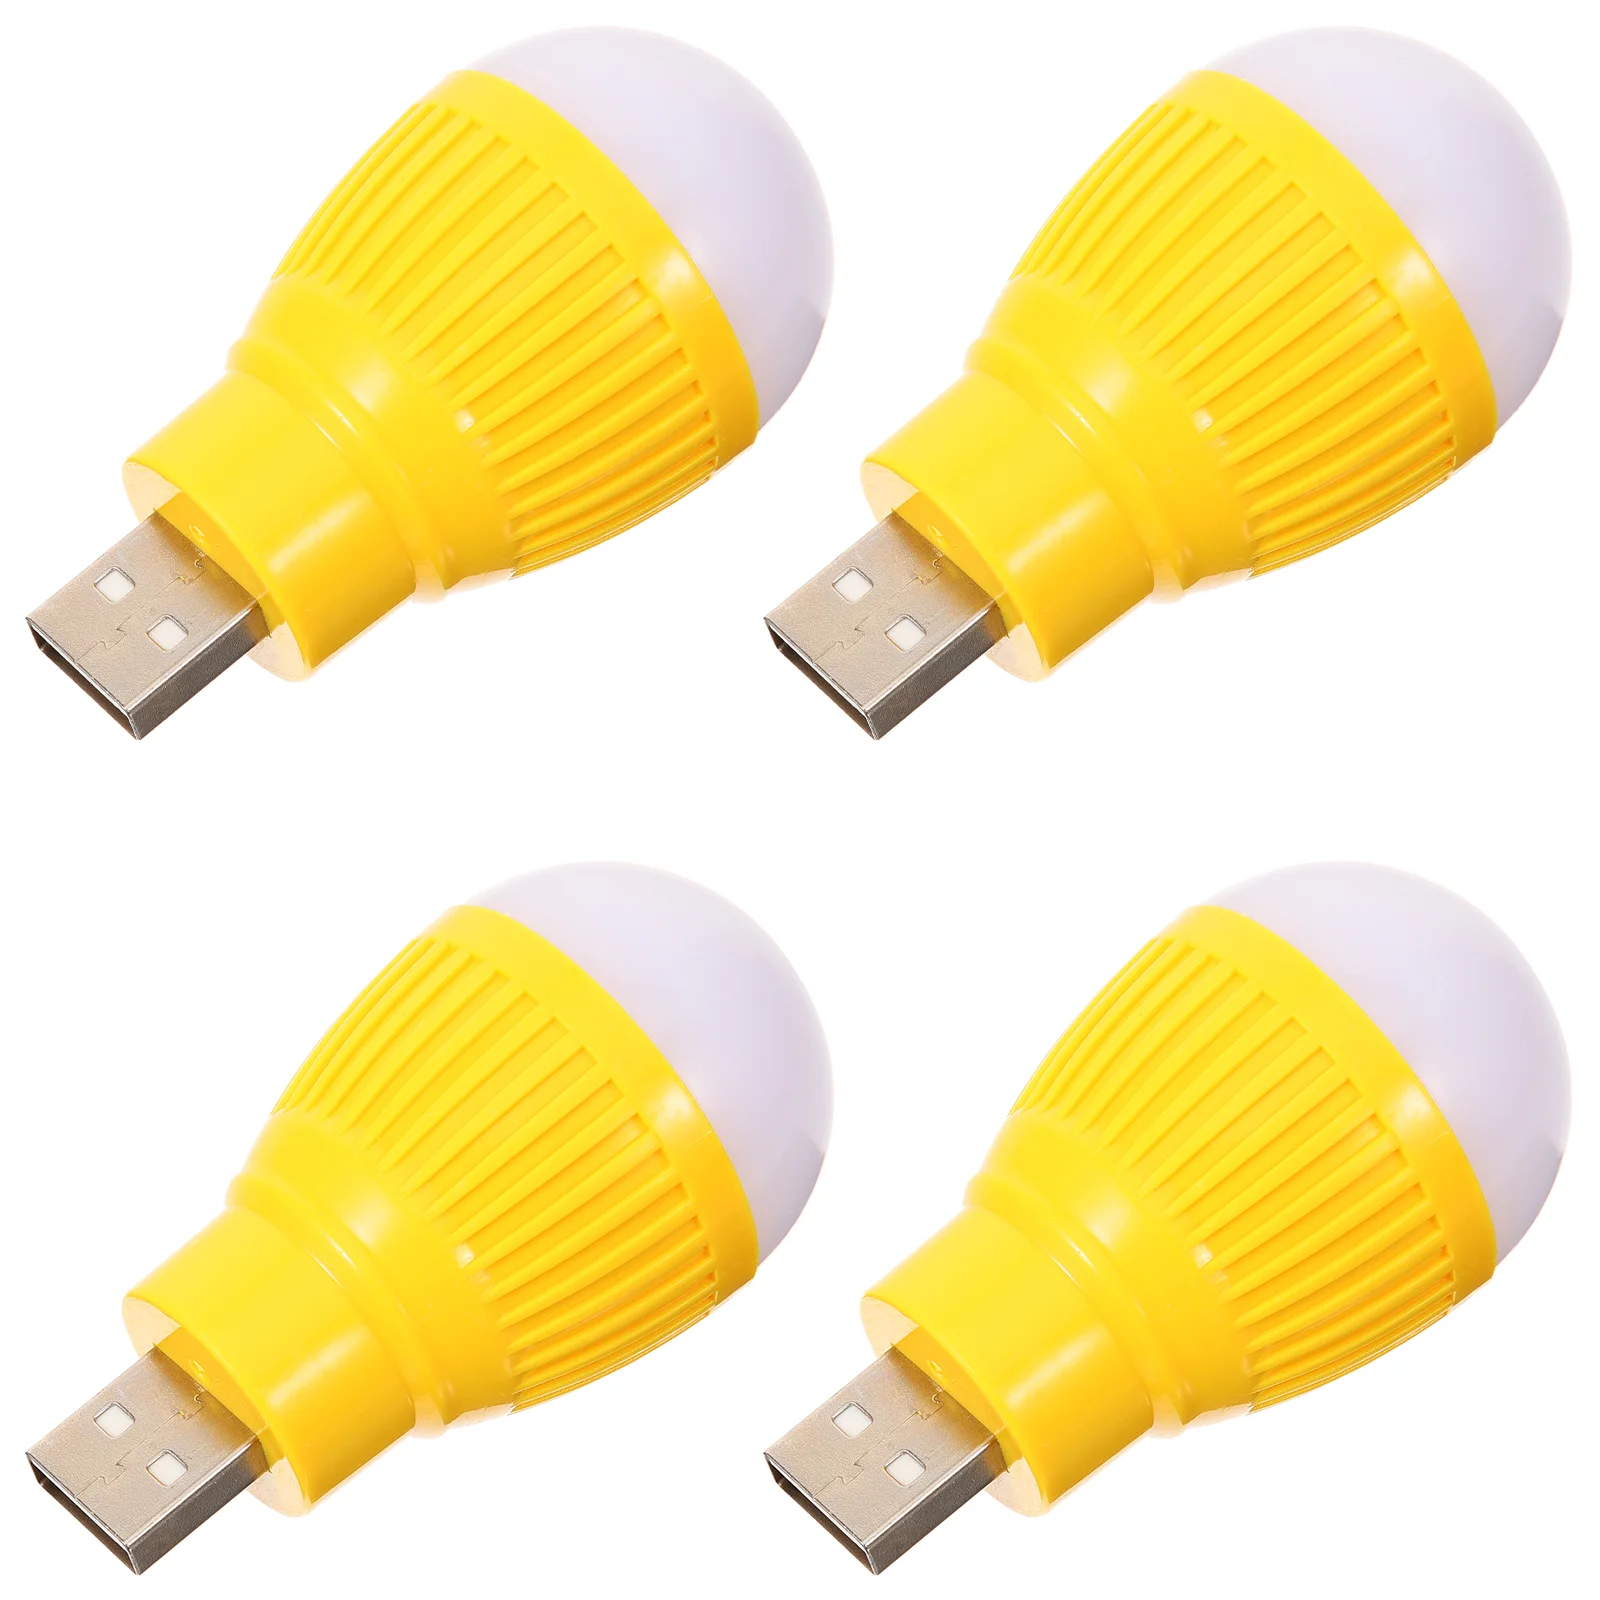 

4 Pcs Night Light USB Home Nightlight Travel Mini LED Small Bulb Hotel Portable Bulbs Replacement